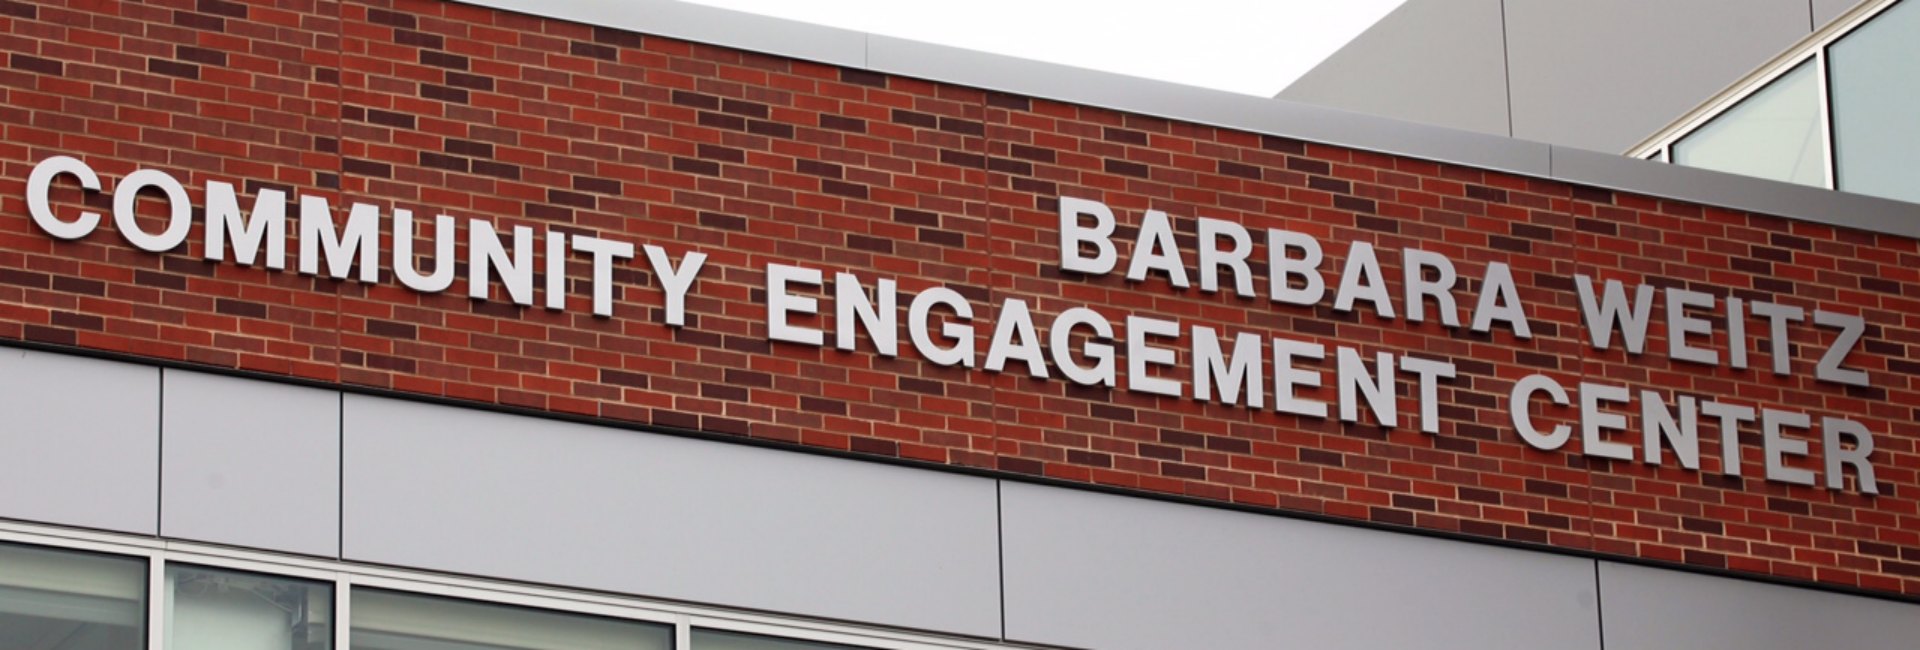 UNO Barbara Weitz Community Engagement Center